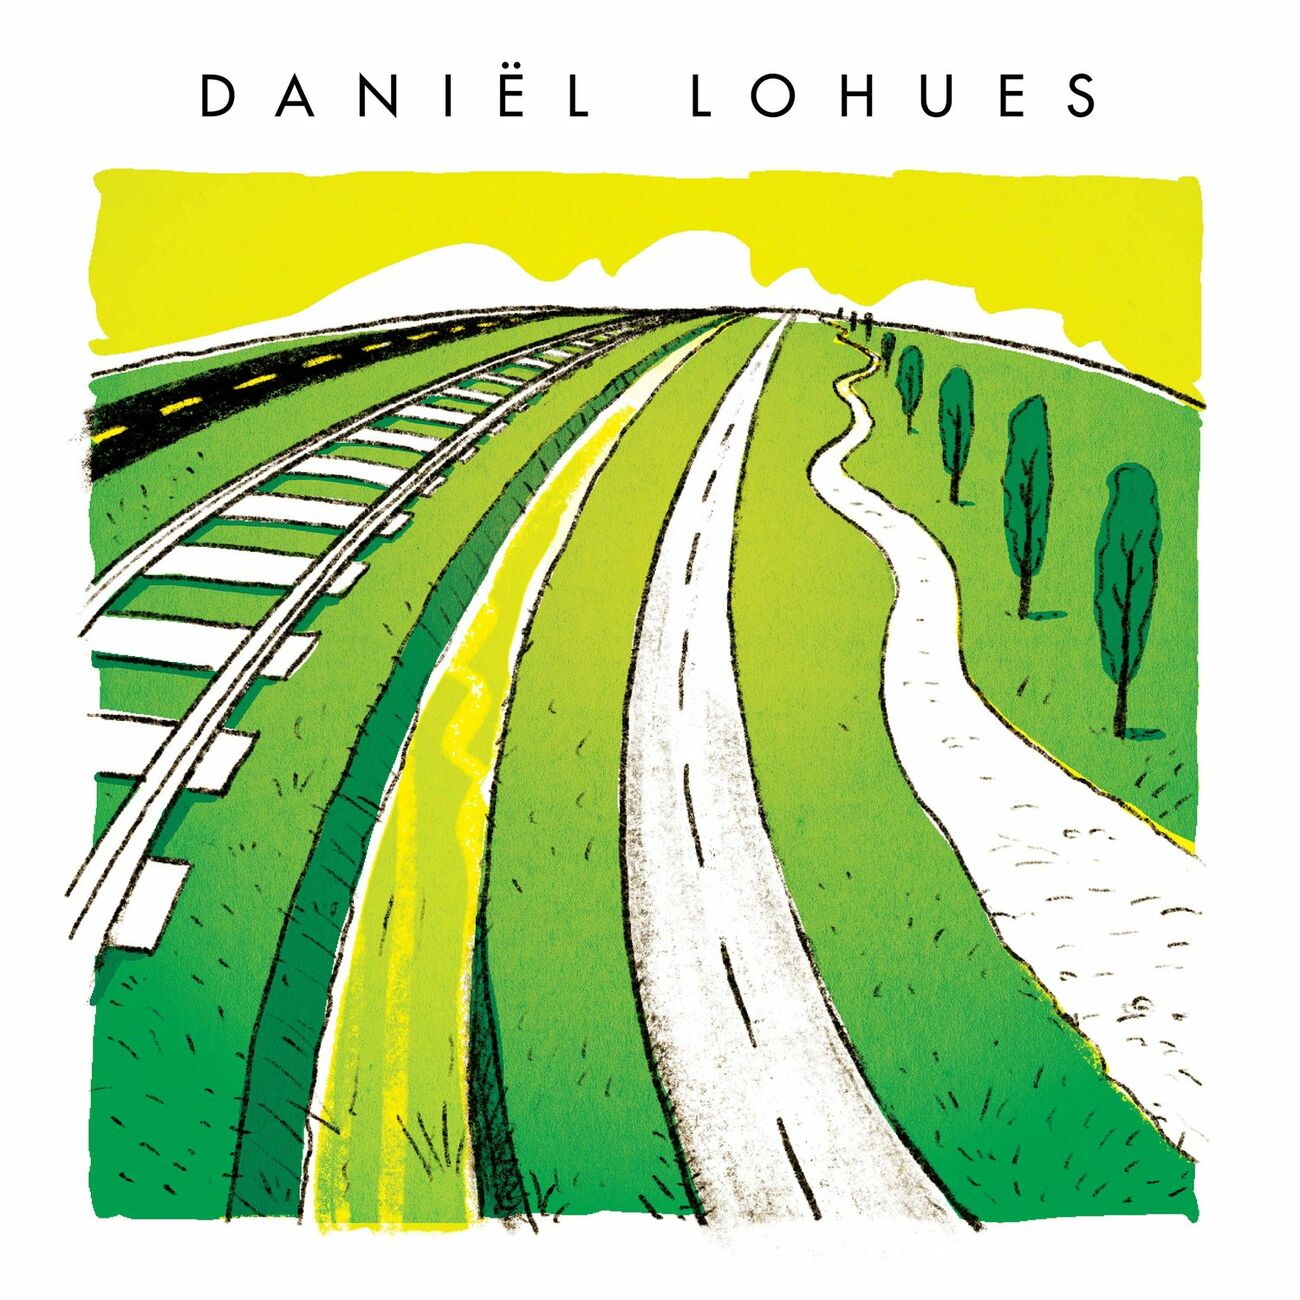 Daniel Lohues - 2022 - Daniël Lohues